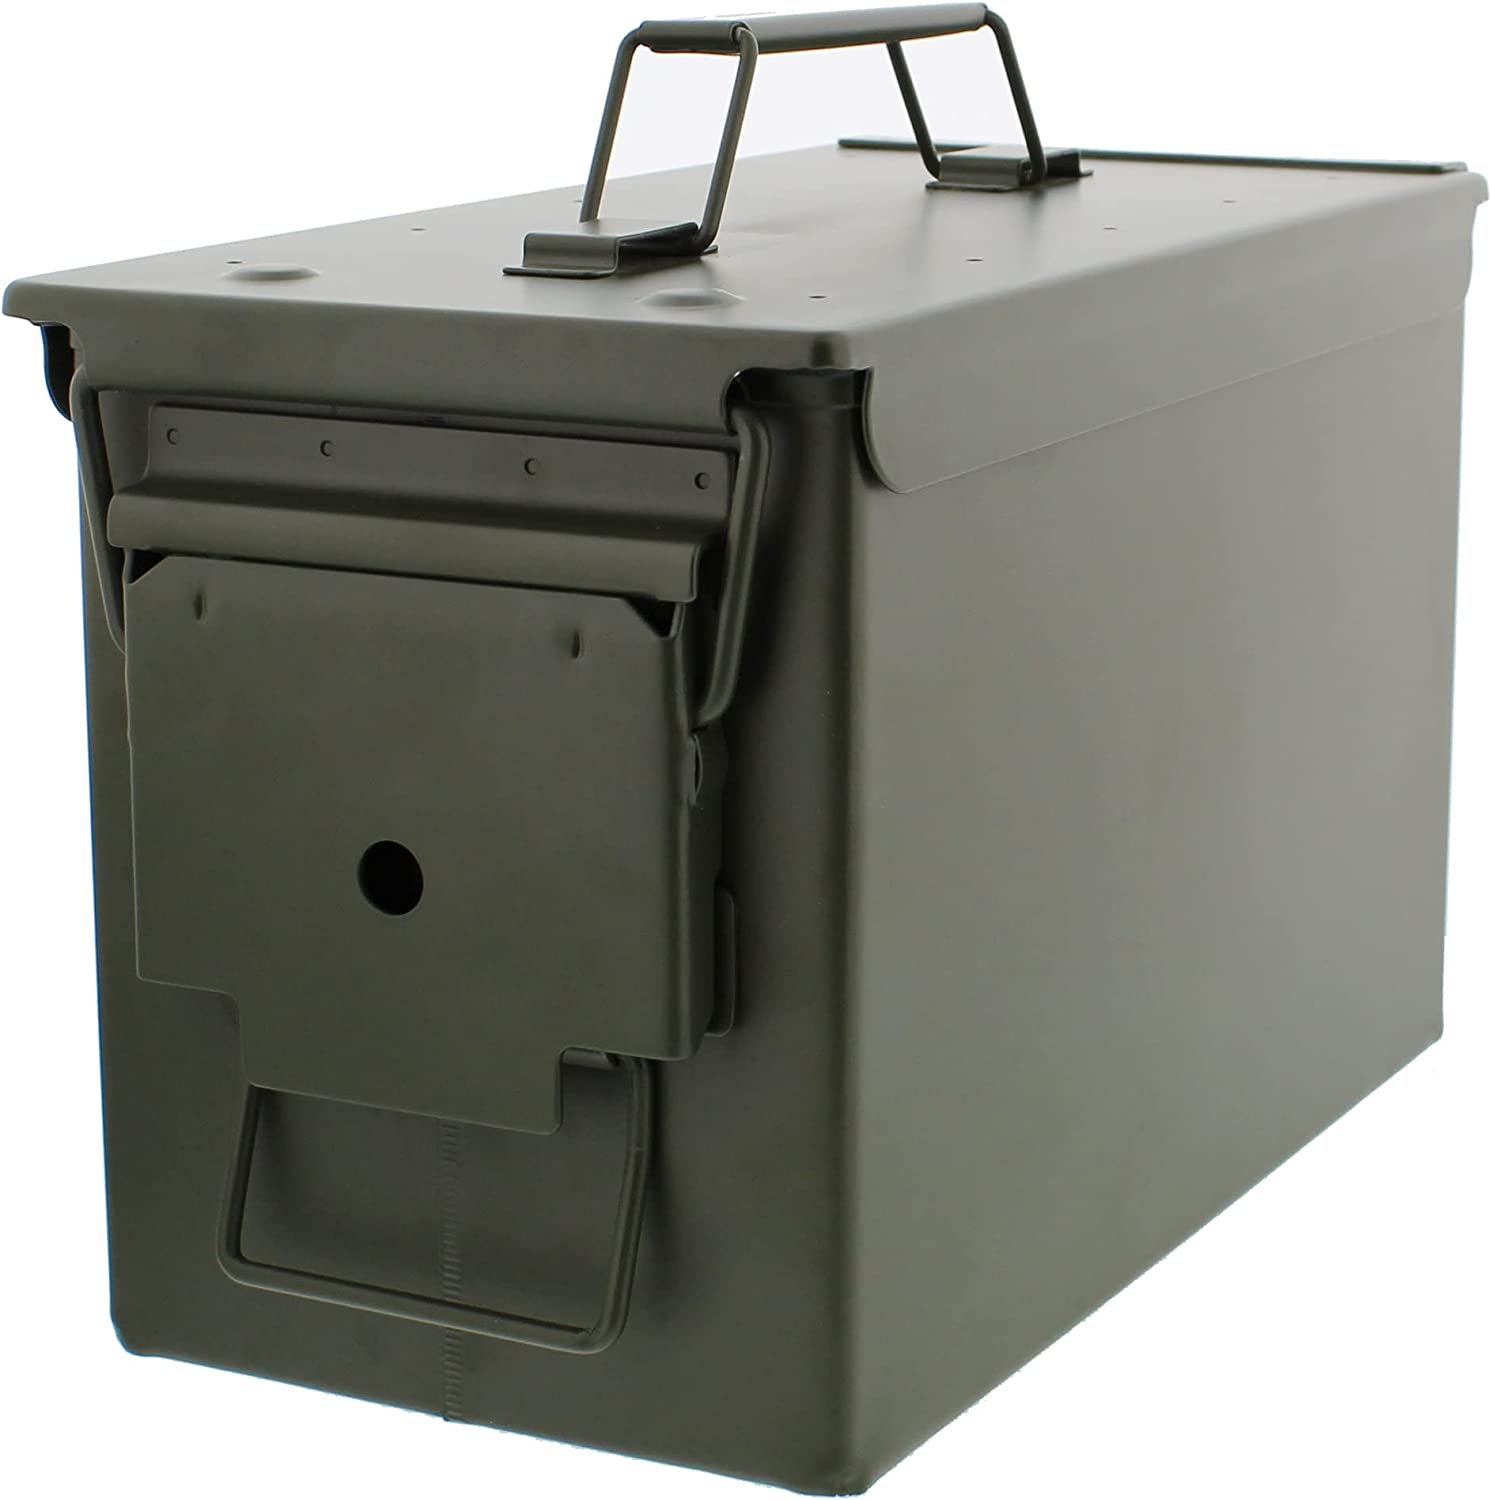  Redneck Convent RC Tan Waterproof Ammo Box Military